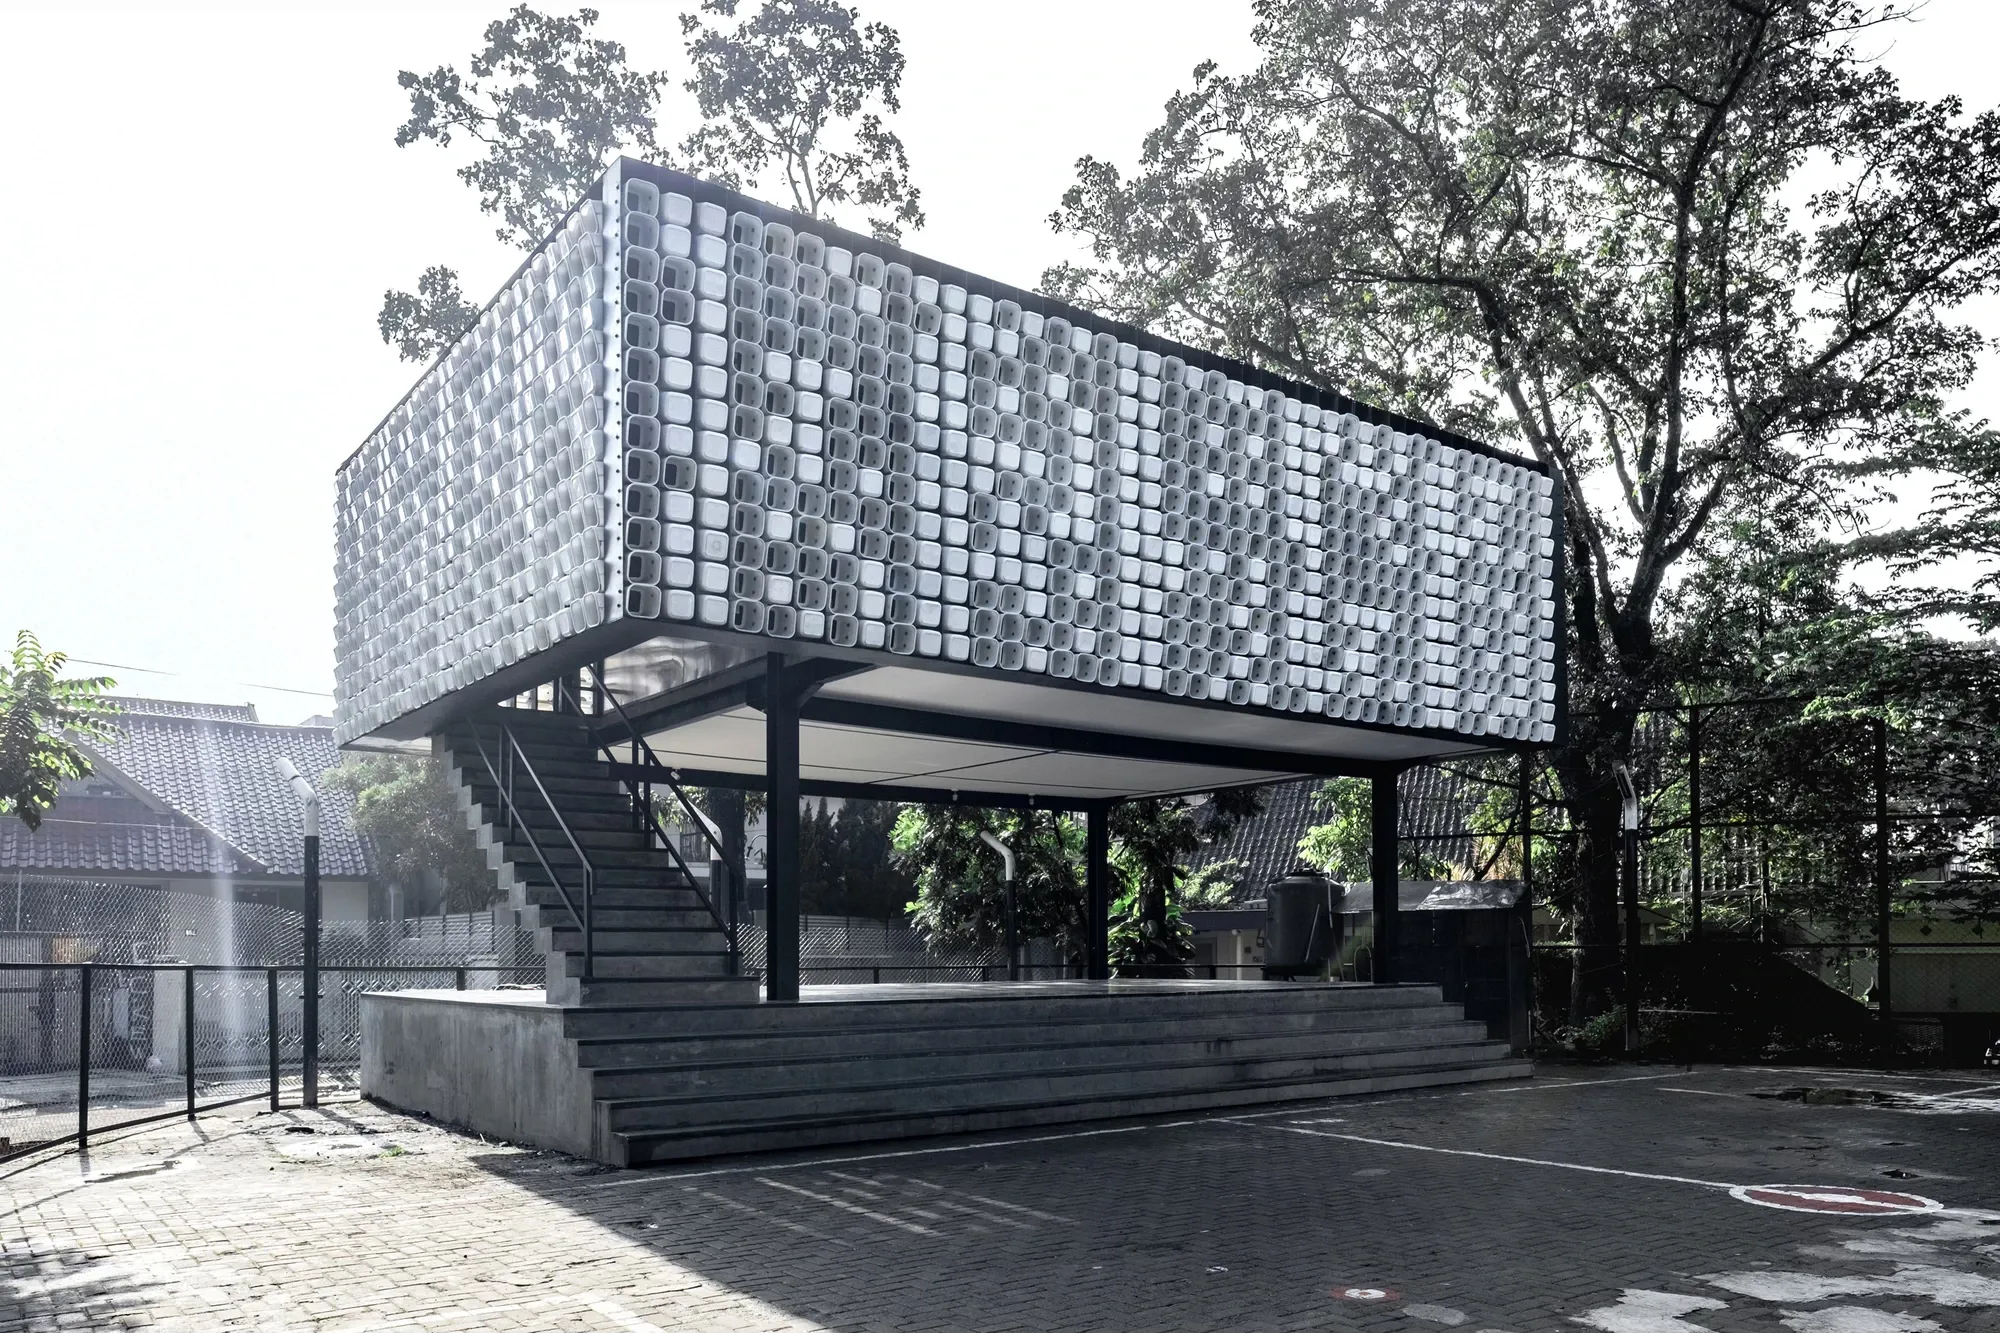 5 Rekomendasi Perpustakaan di Bandung yang Bikin Betah